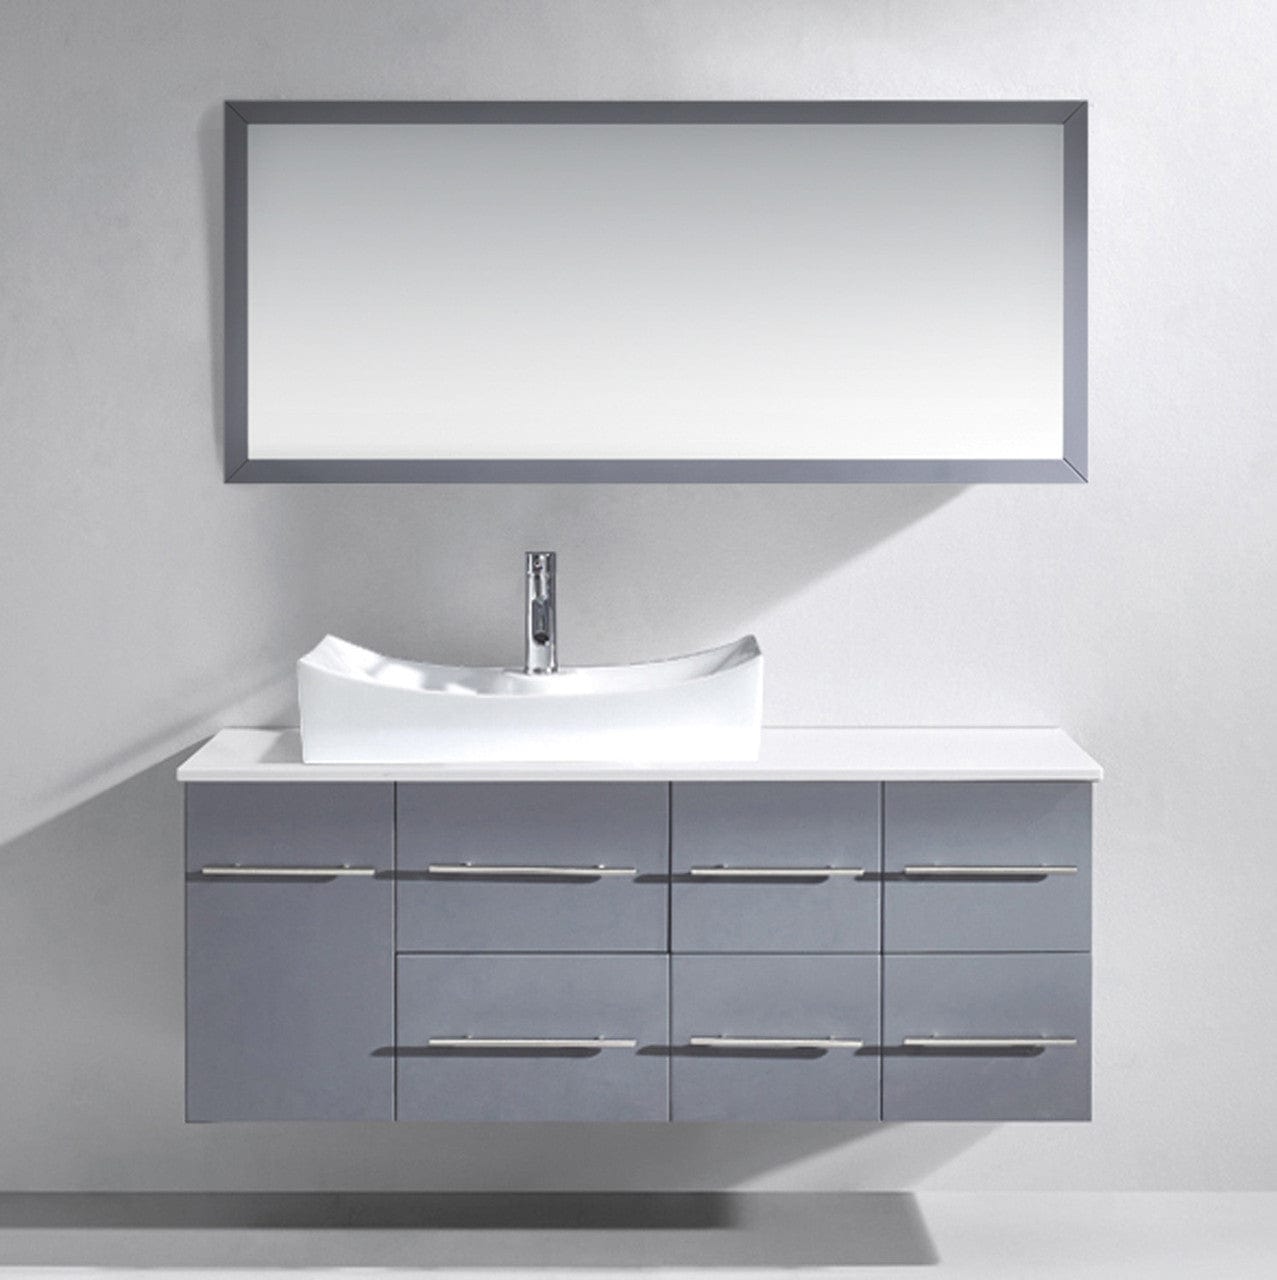 Virtu USA Ceanna 55 Single Bathroom Vanity Set in Grey close up front view